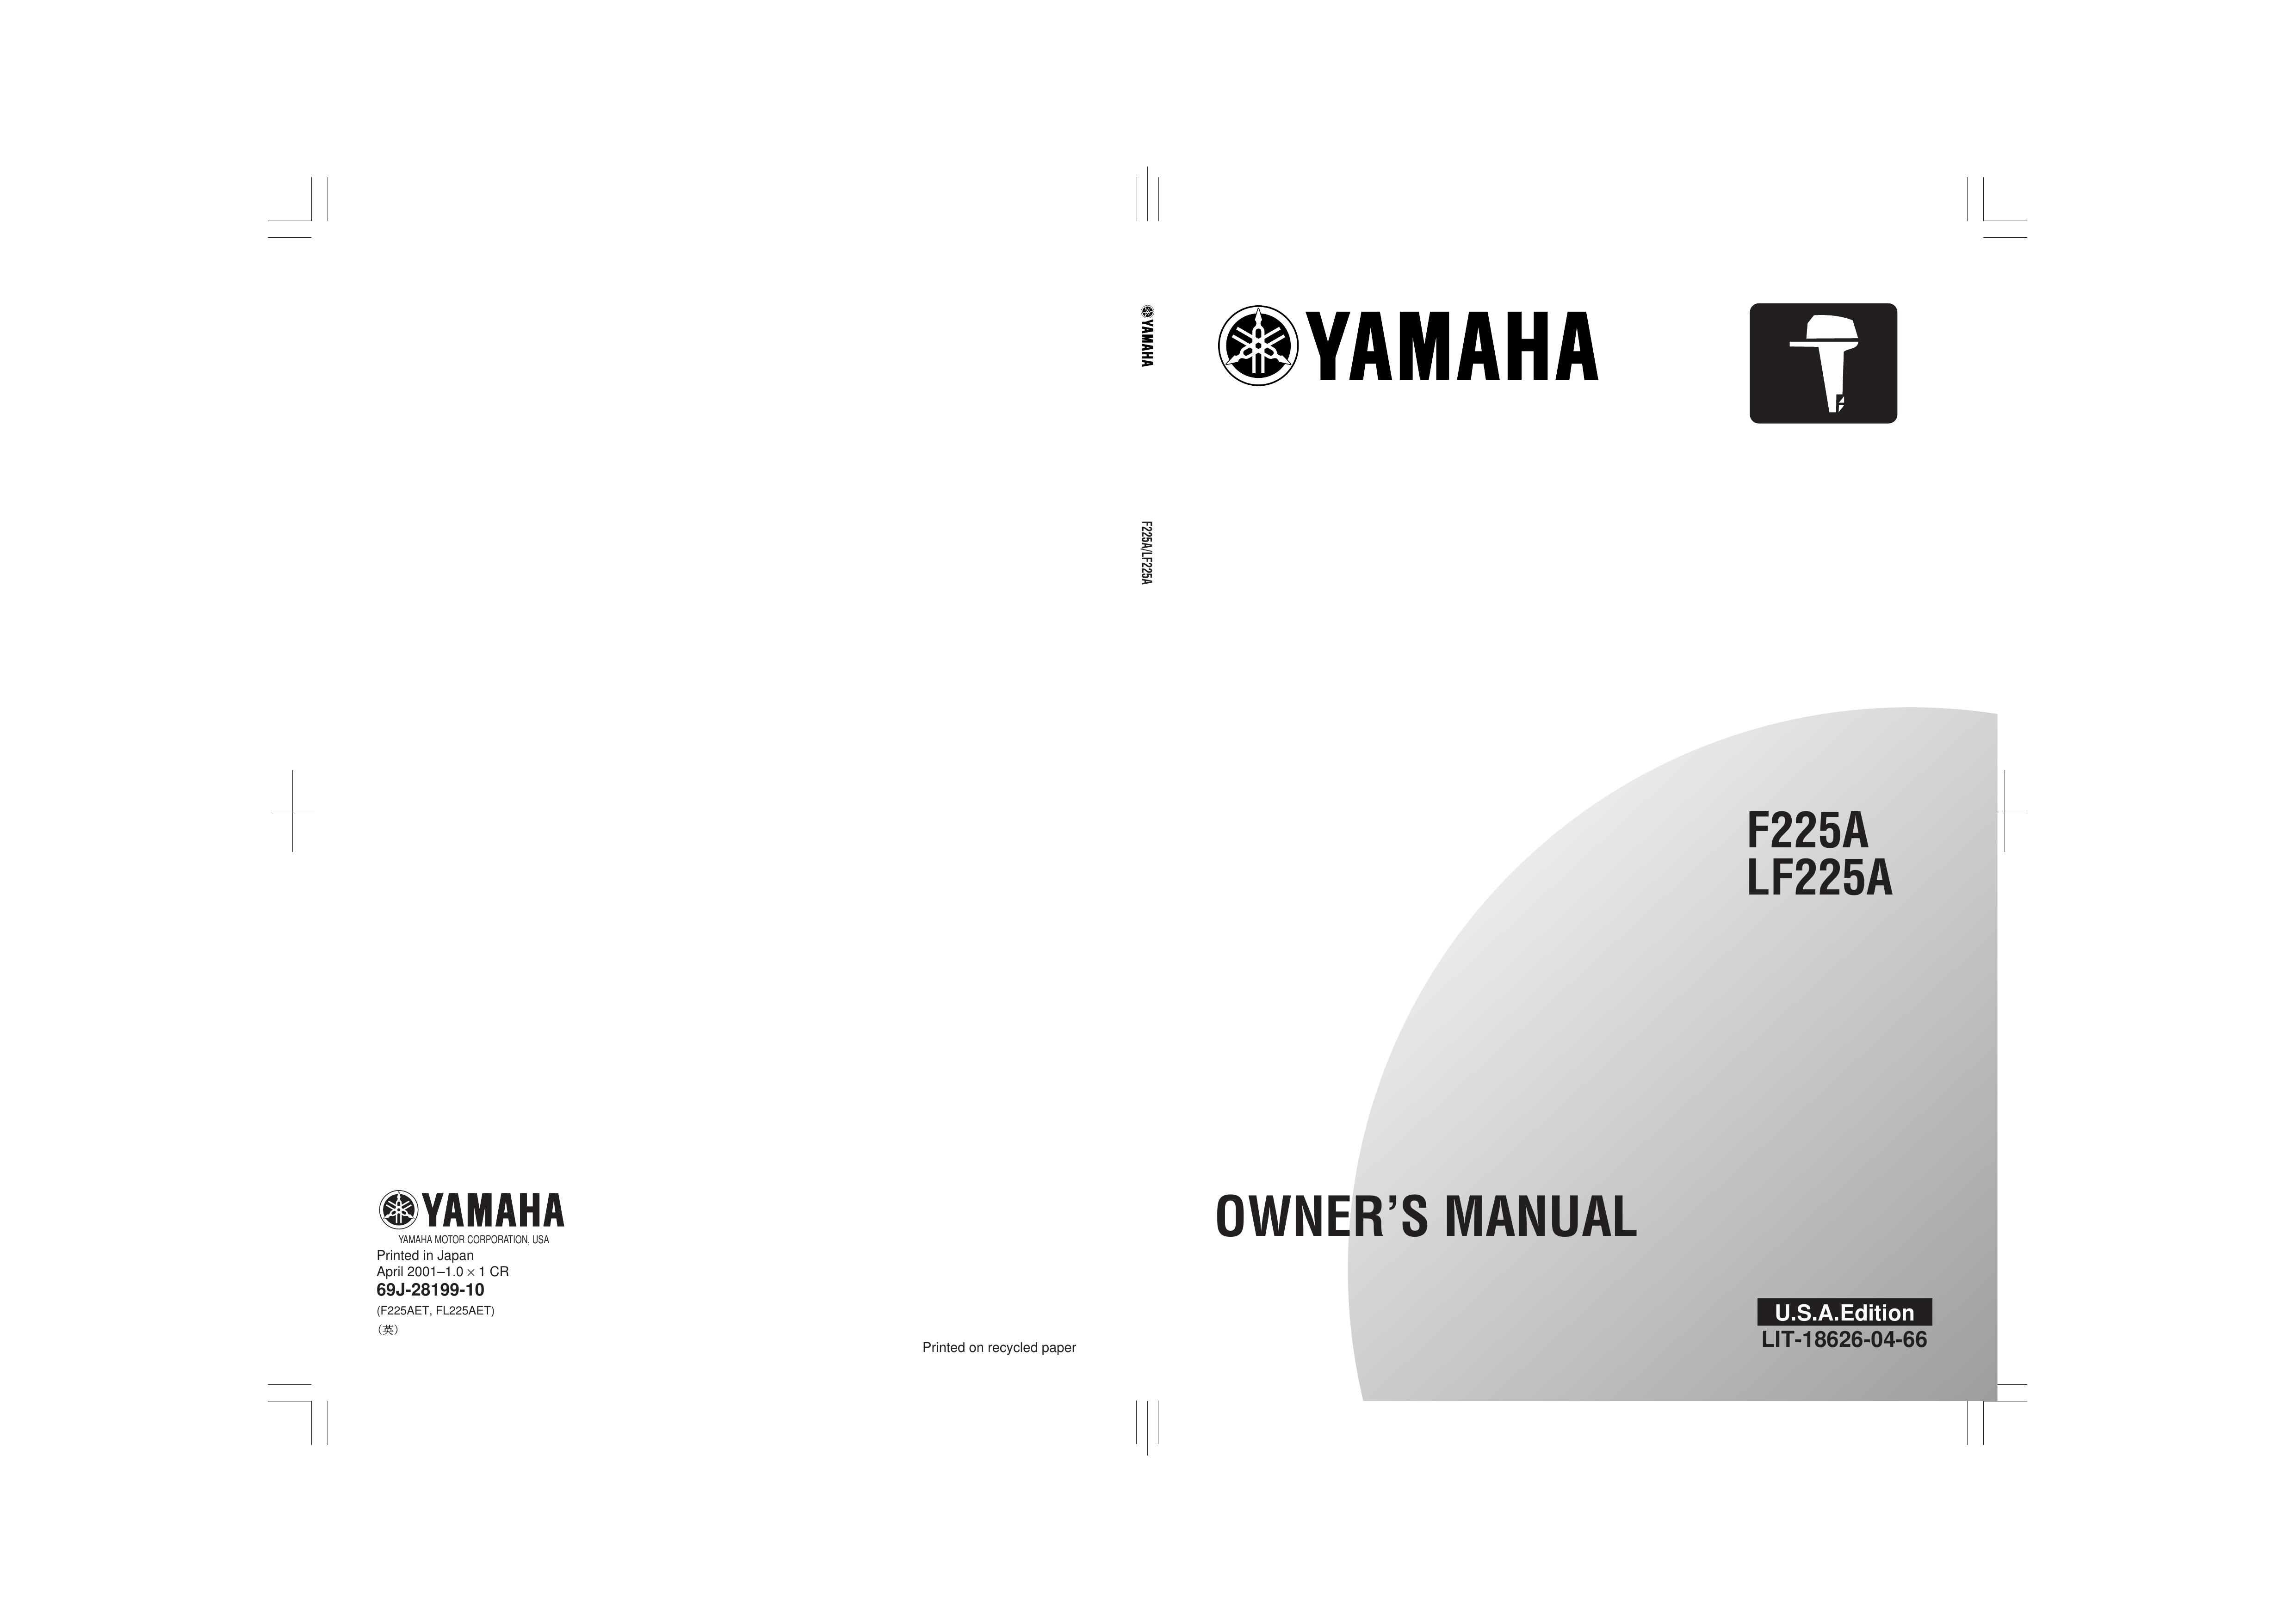 Yamaha F225A Outboard Motor User Manual